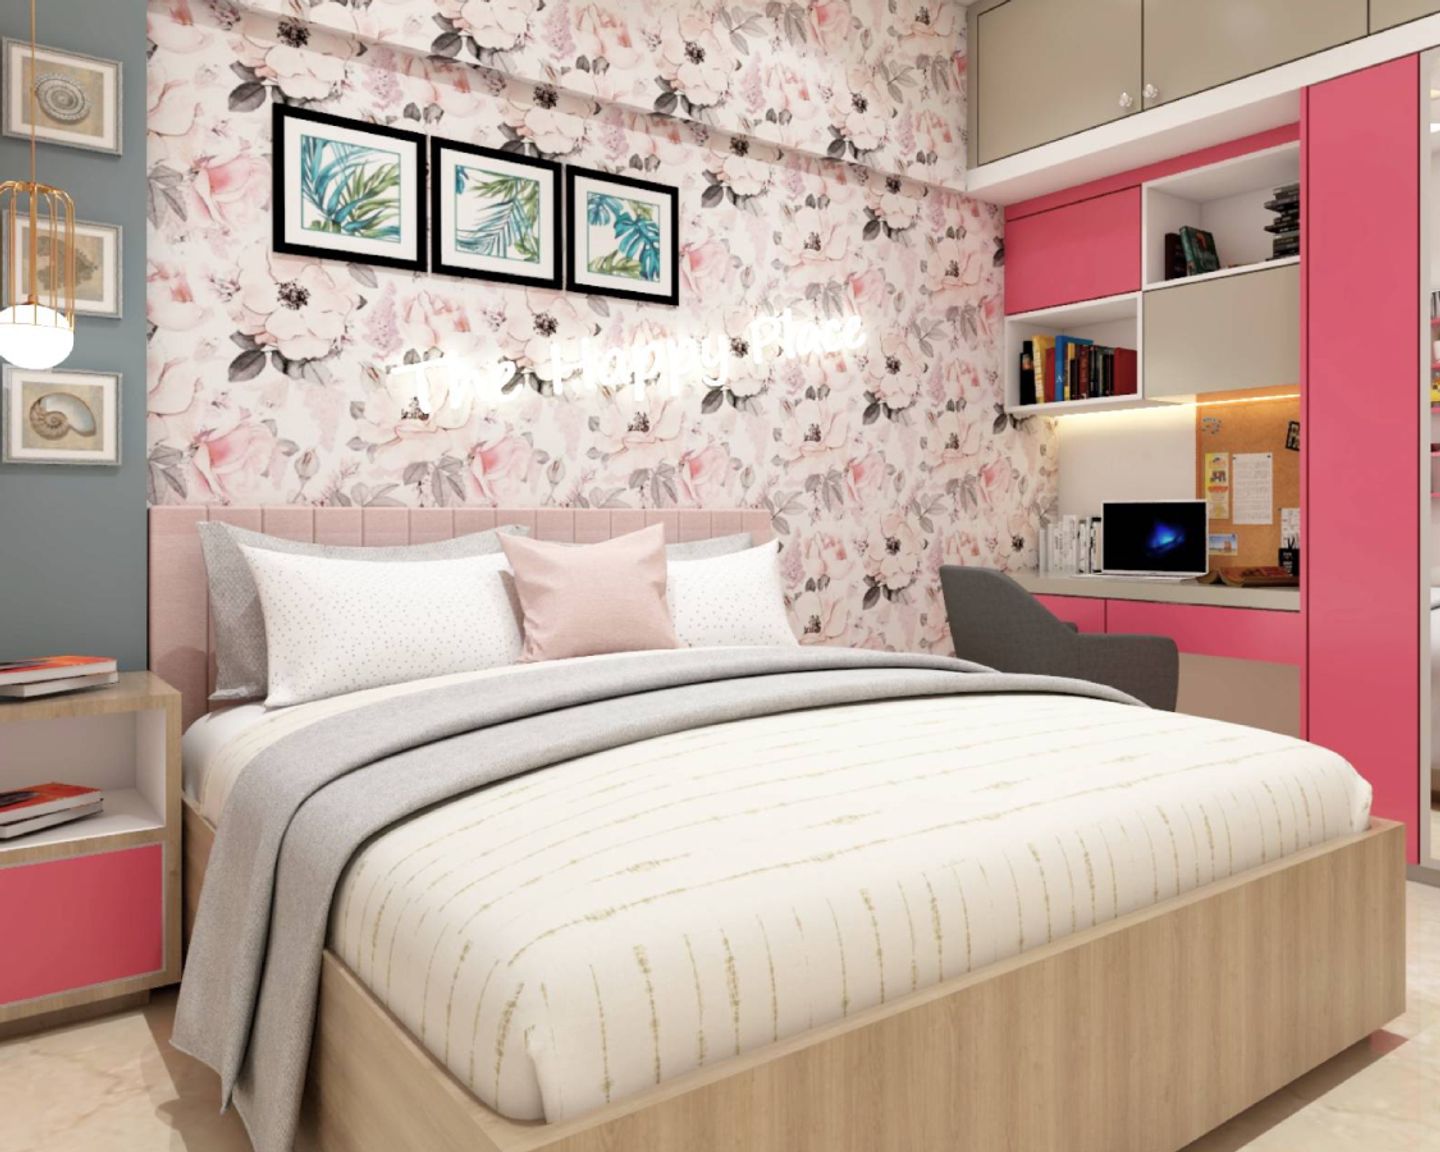 11x10 Ft Girls Room Design With Floral Wallpaper - Livspace